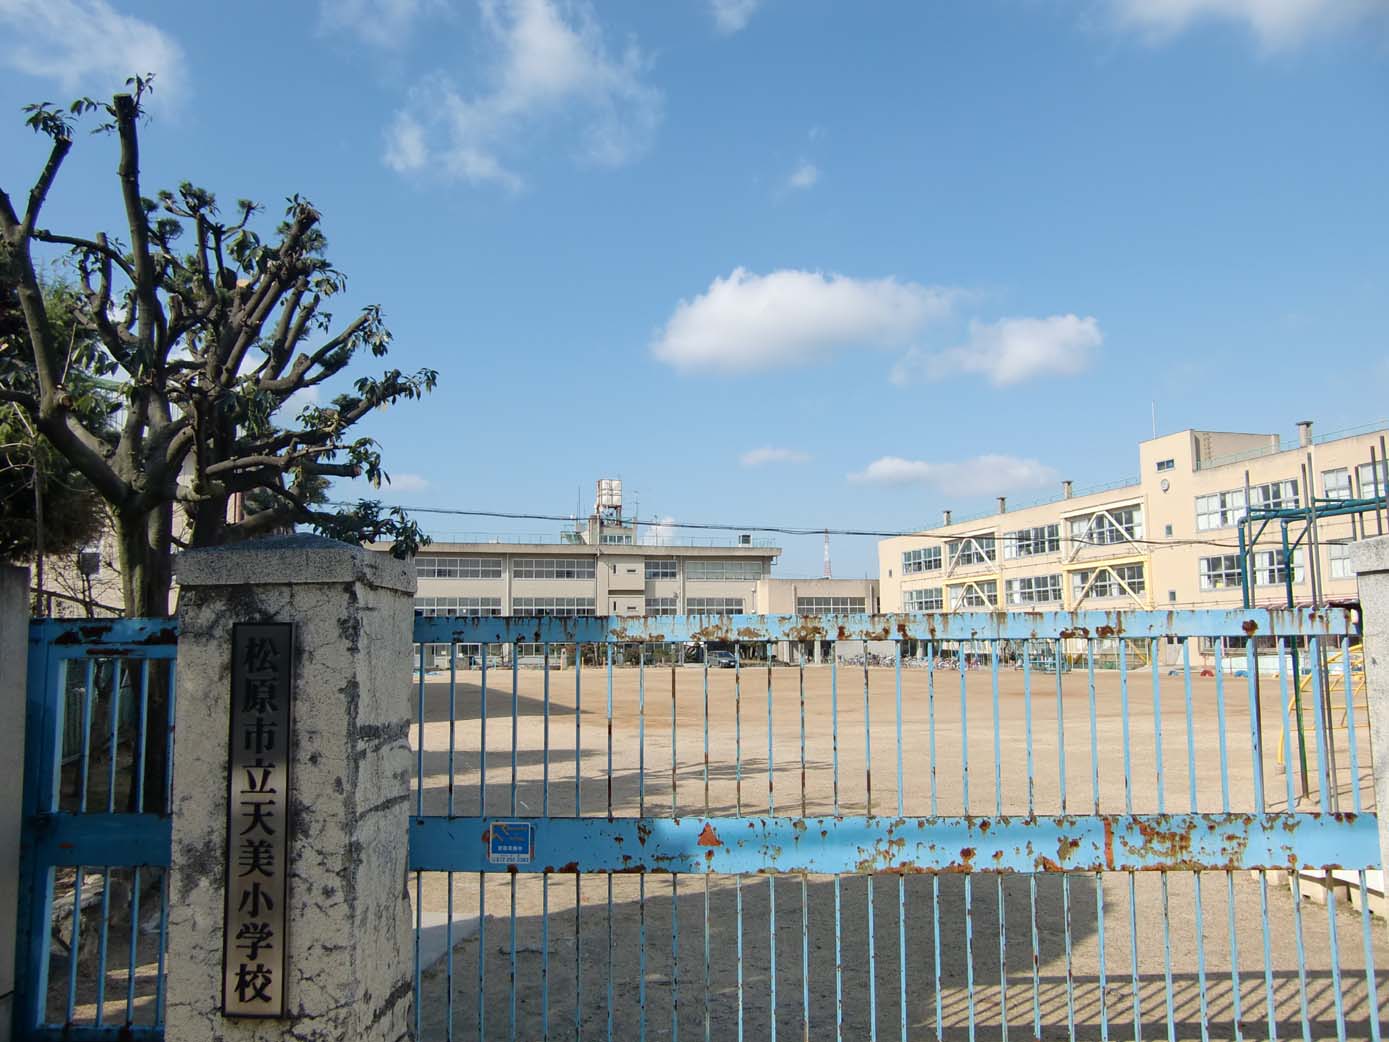 Primary school. Matsubara Municipal Amami up to elementary school (elementary school) 711m